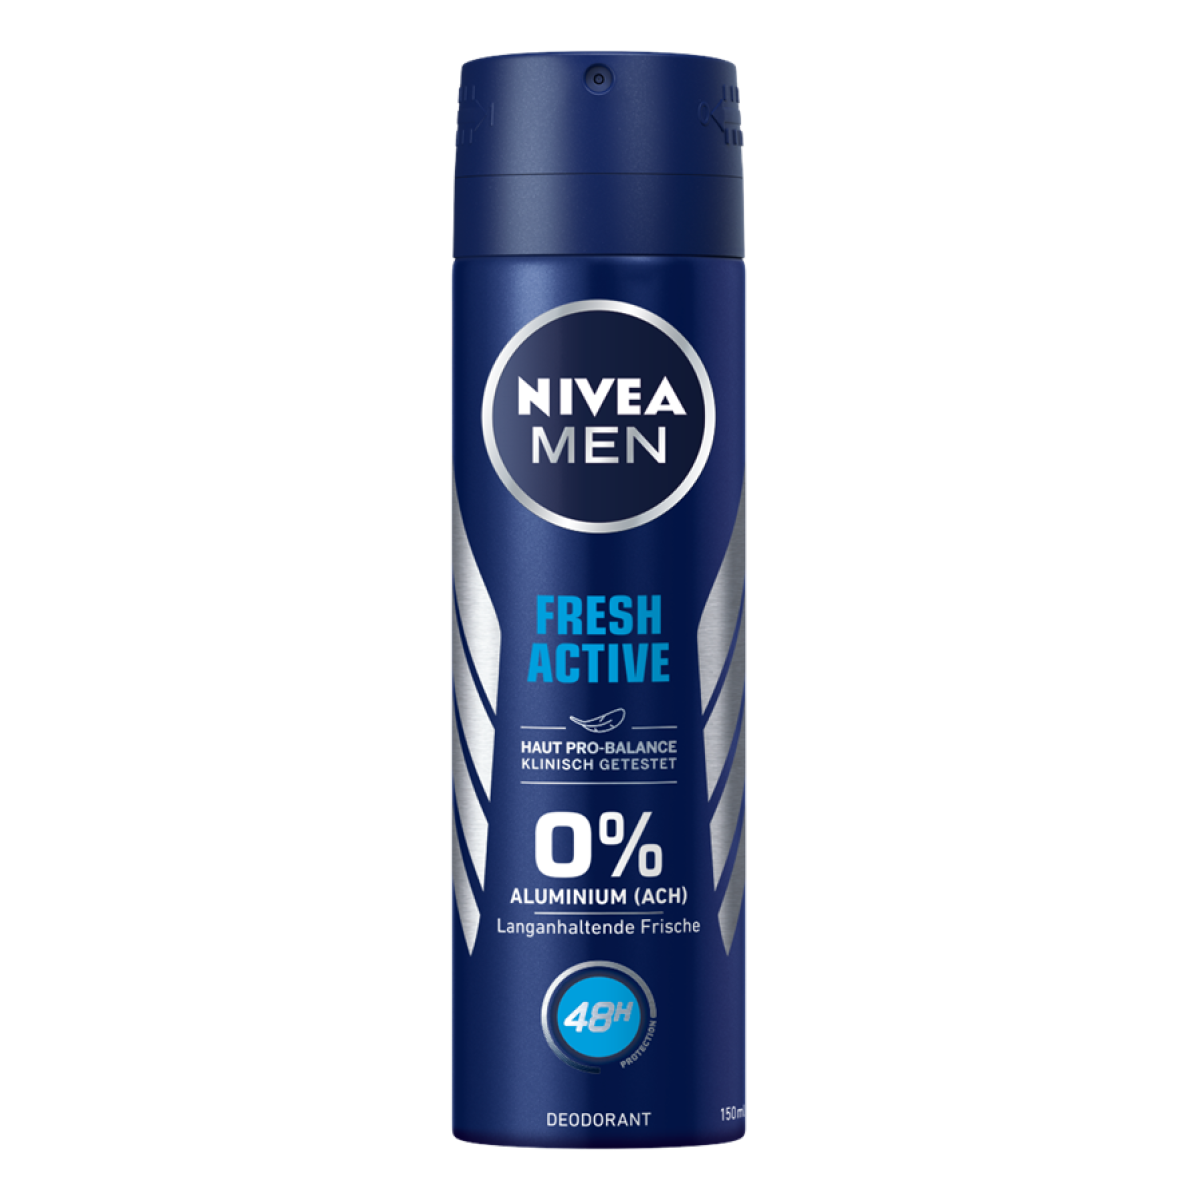 Primary image of Fresh Active Deodorant Spray for Men